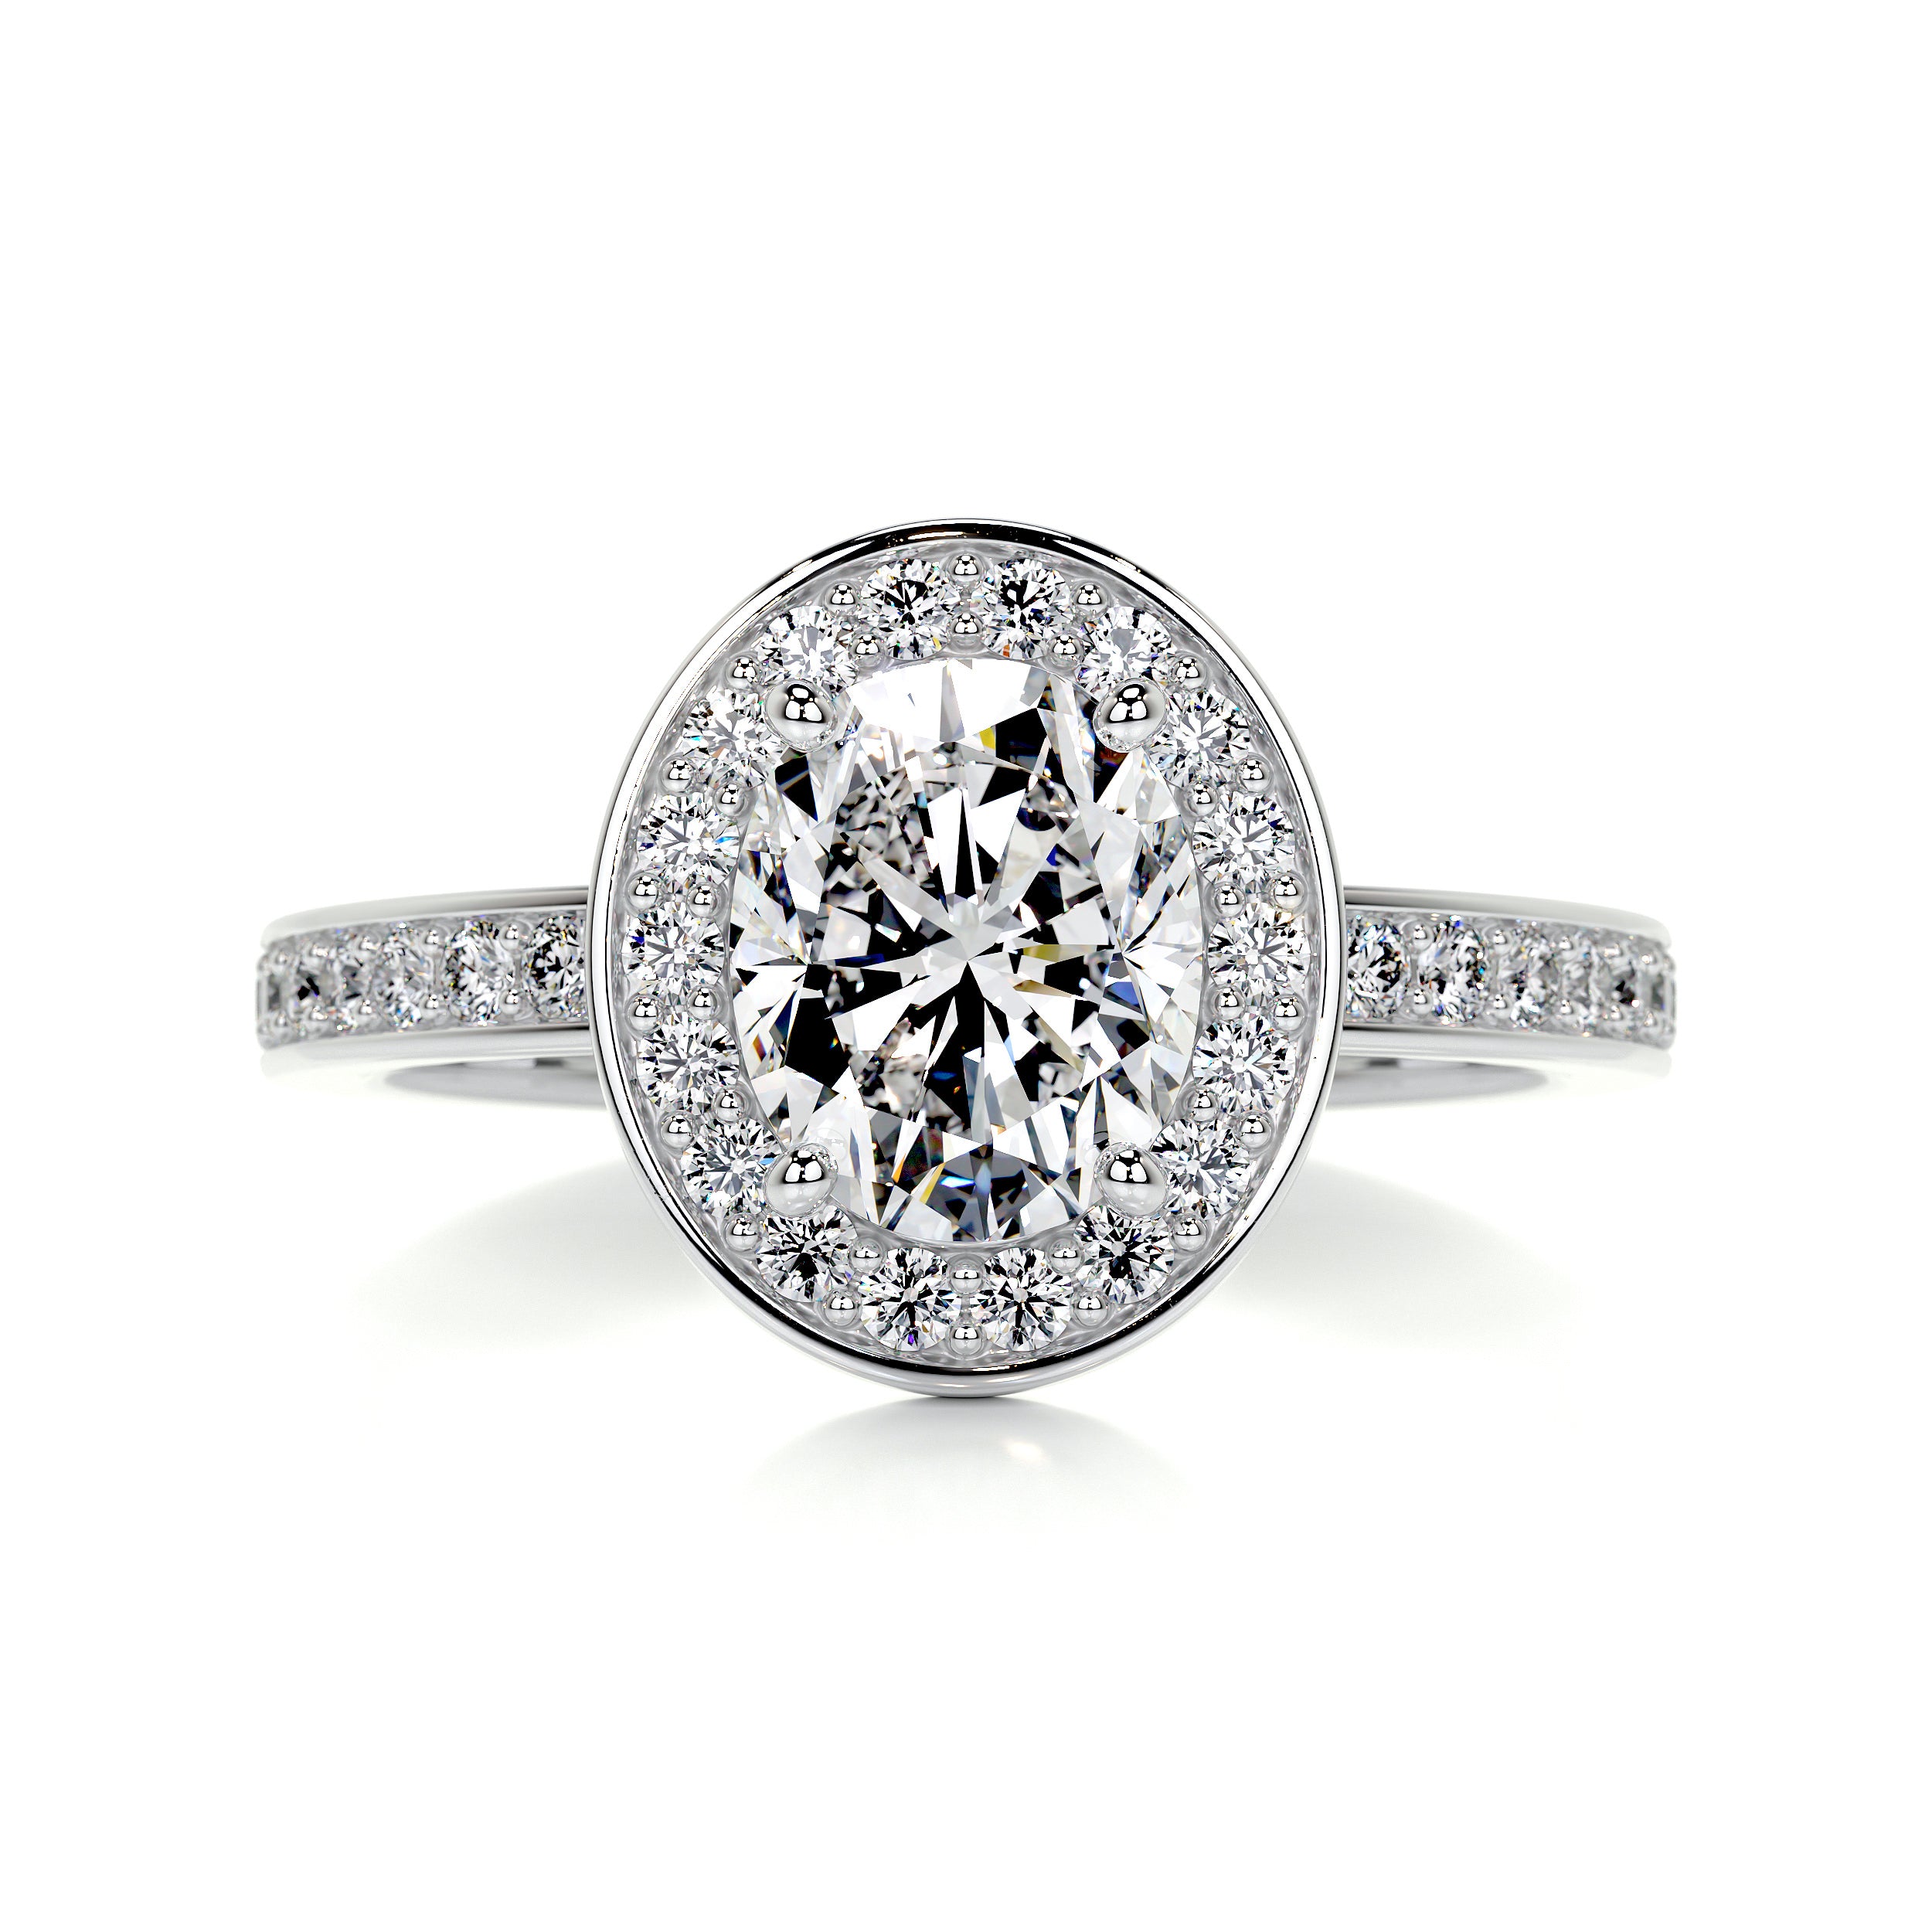 Raina Diamond Engagement Ring   (1.80 Carat) -14K White Gold